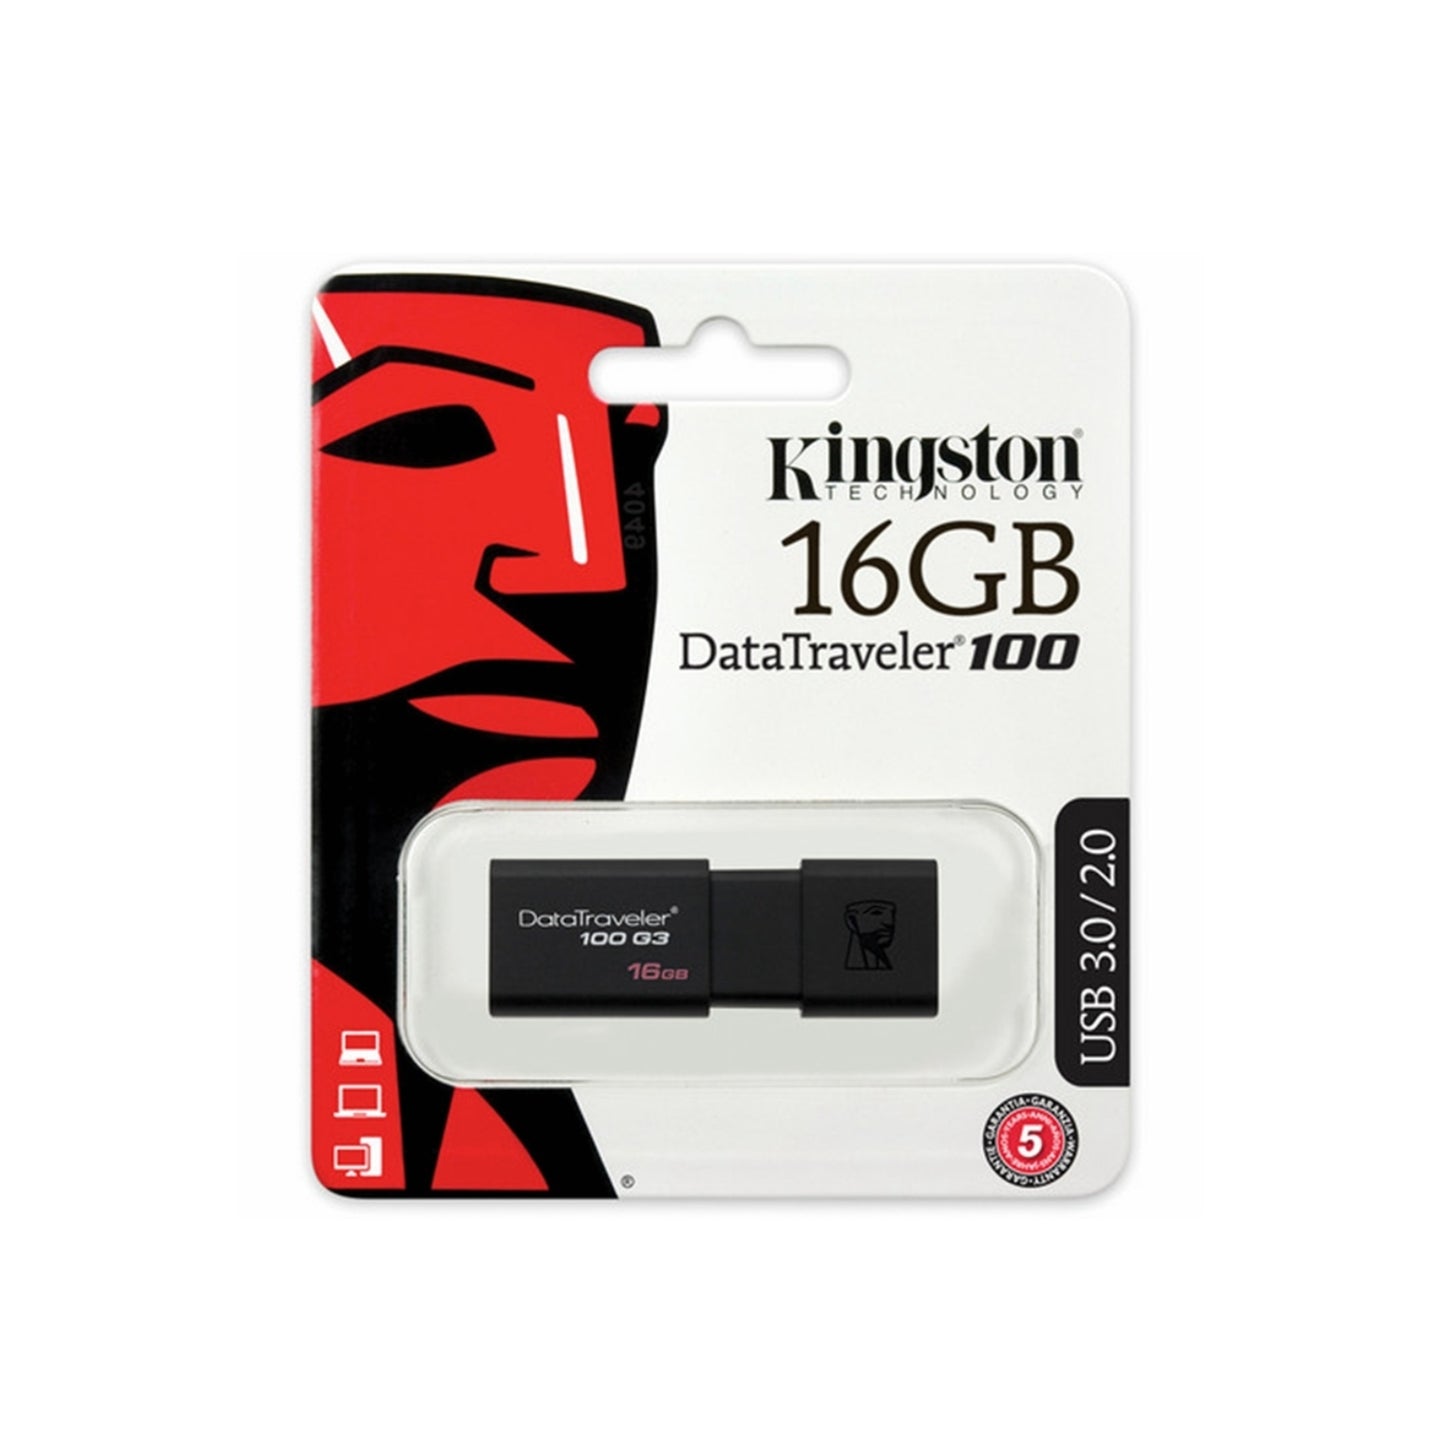 Kingston Data Traveler 100 16GB USB 3.0/2.0 Flash Drive Memory Stick Pen PC MAC